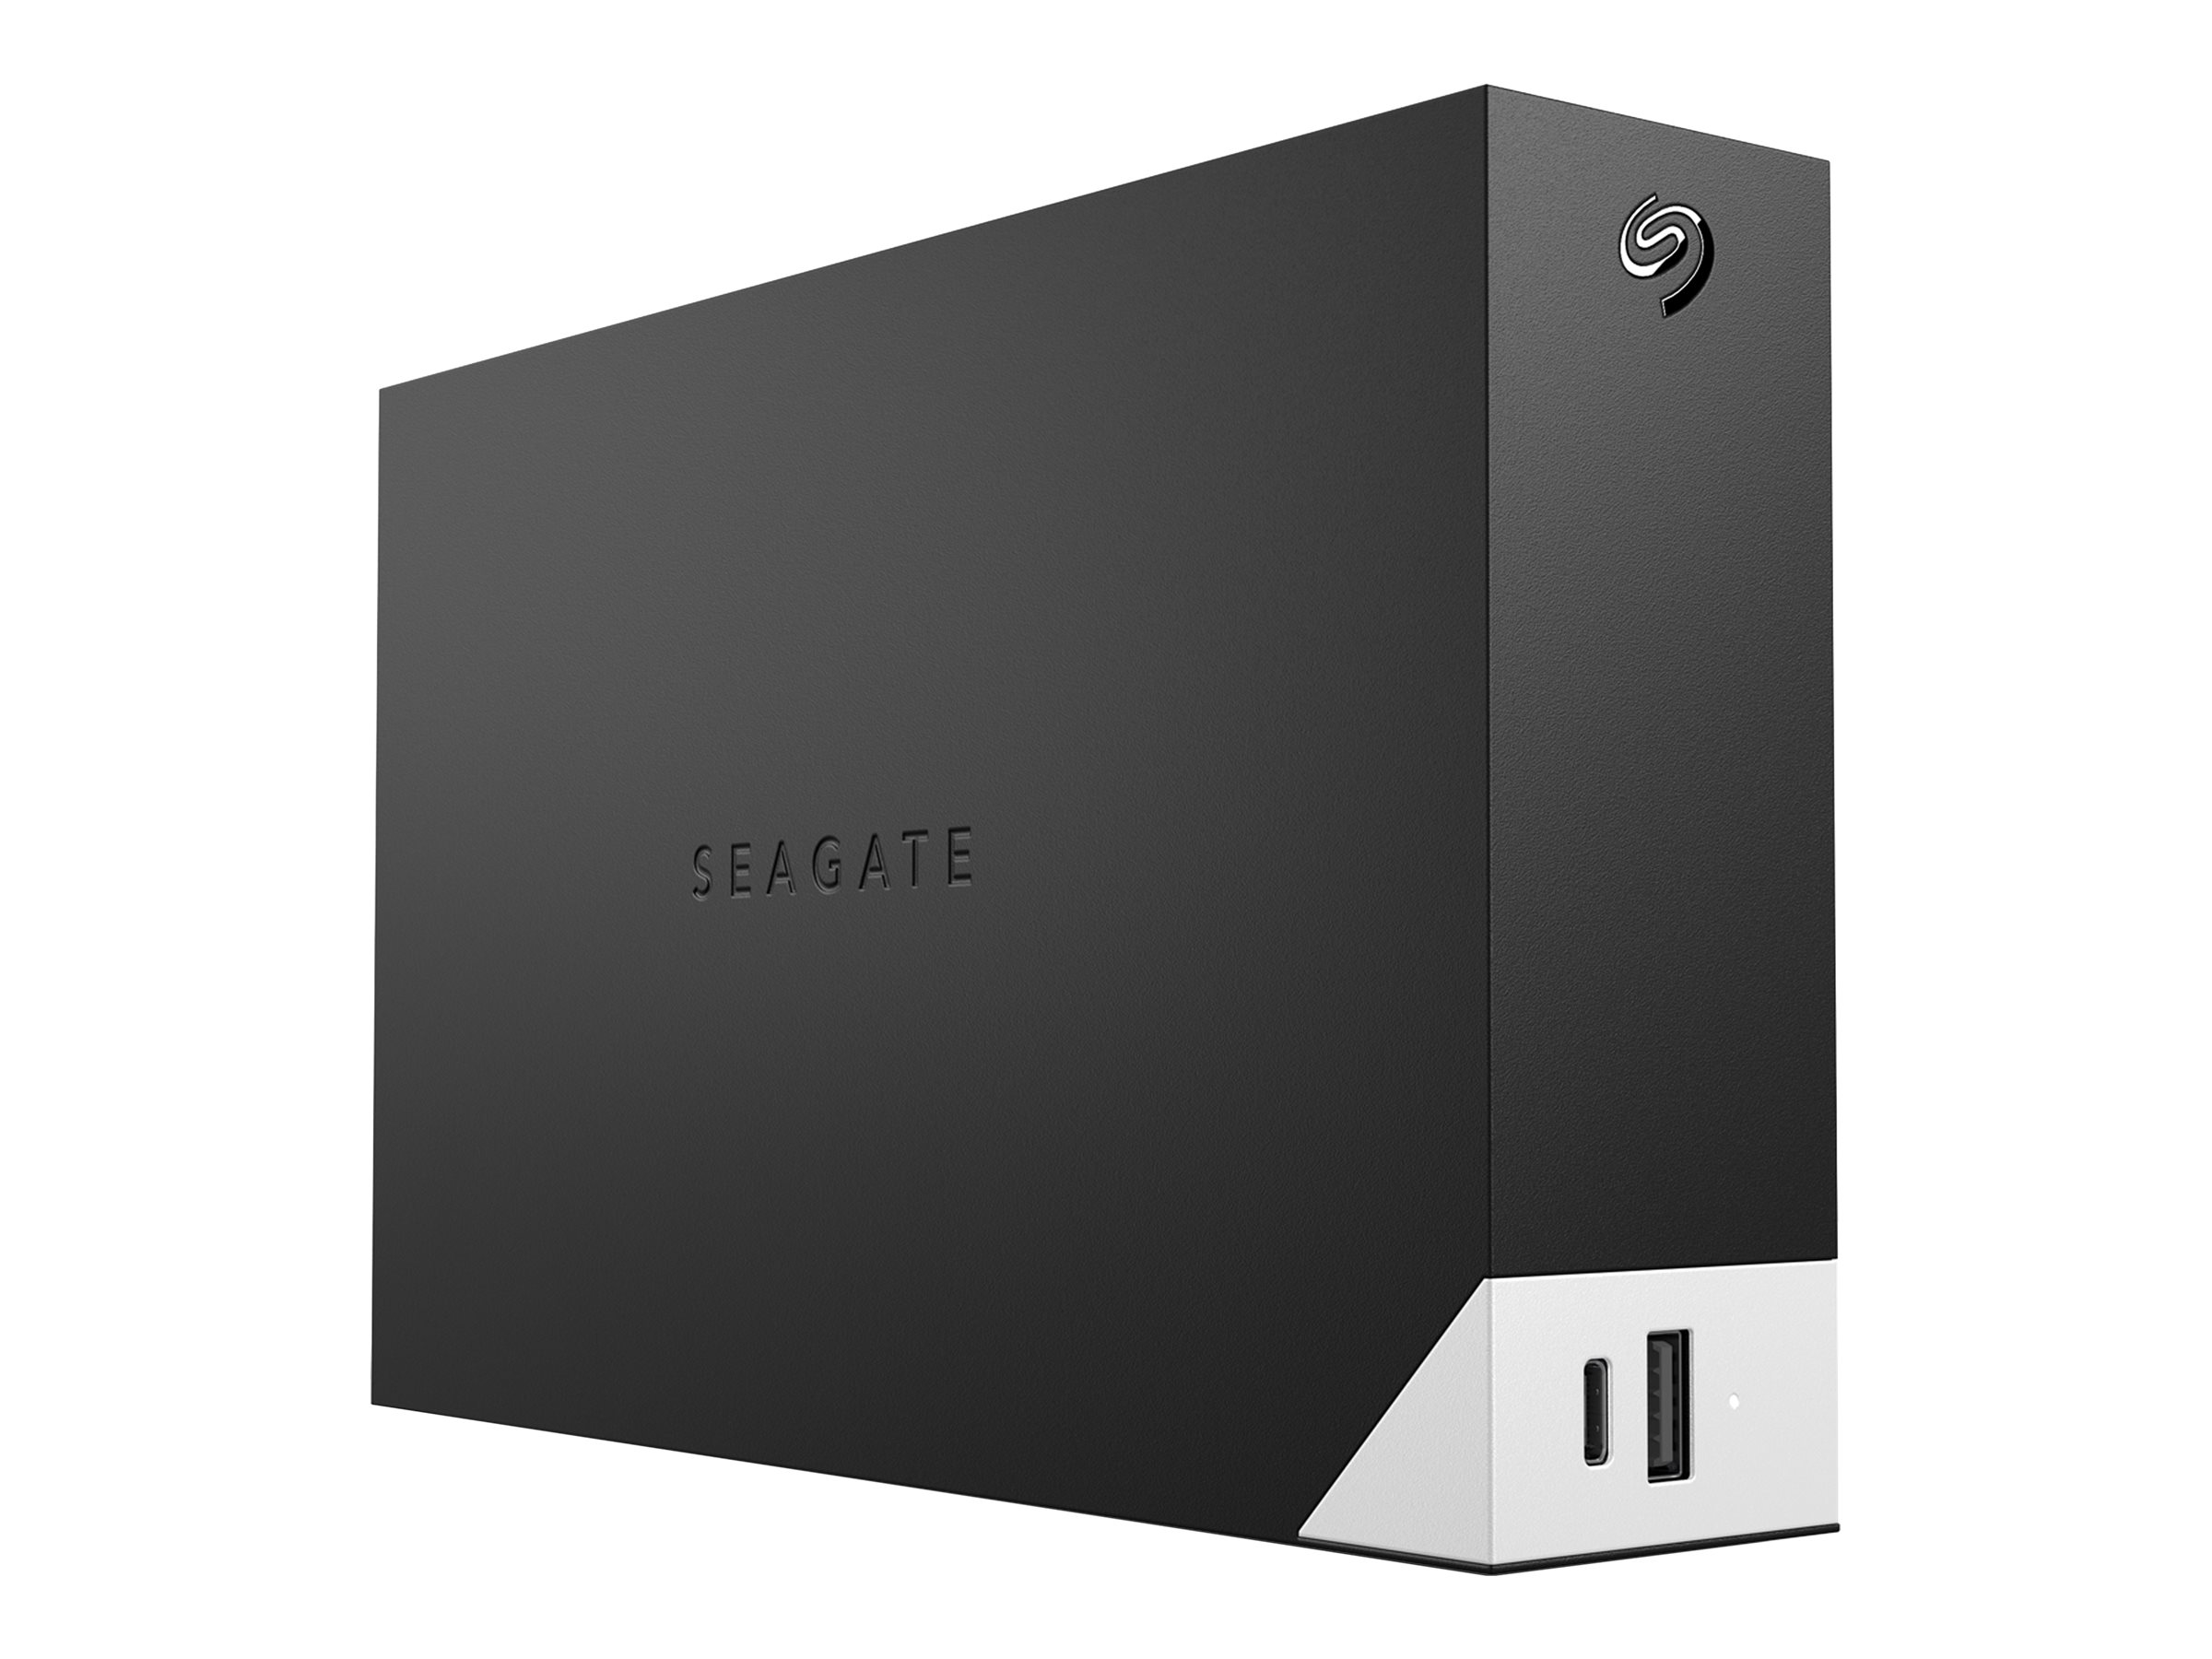 Seagate One Touch with hub STLC8000400 - Festplatte - 8 TB - extern (Stationär) - USB 3.0 - Schwarz